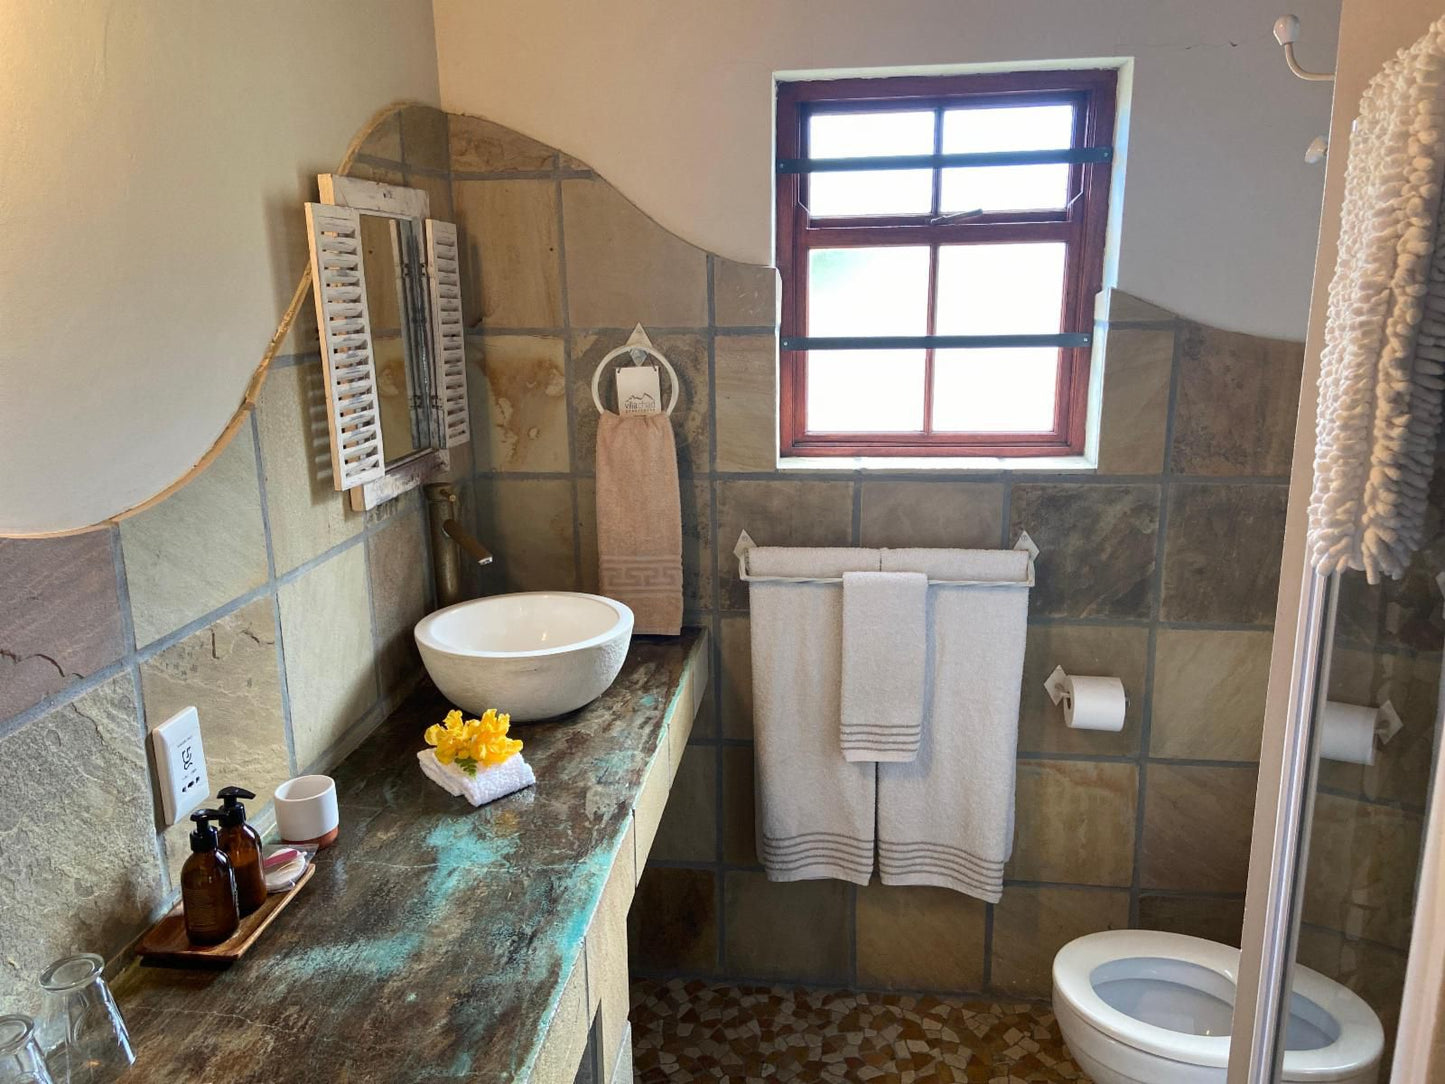 Villachad Guest House Kleinmond Western Cape South Africa Bathroom